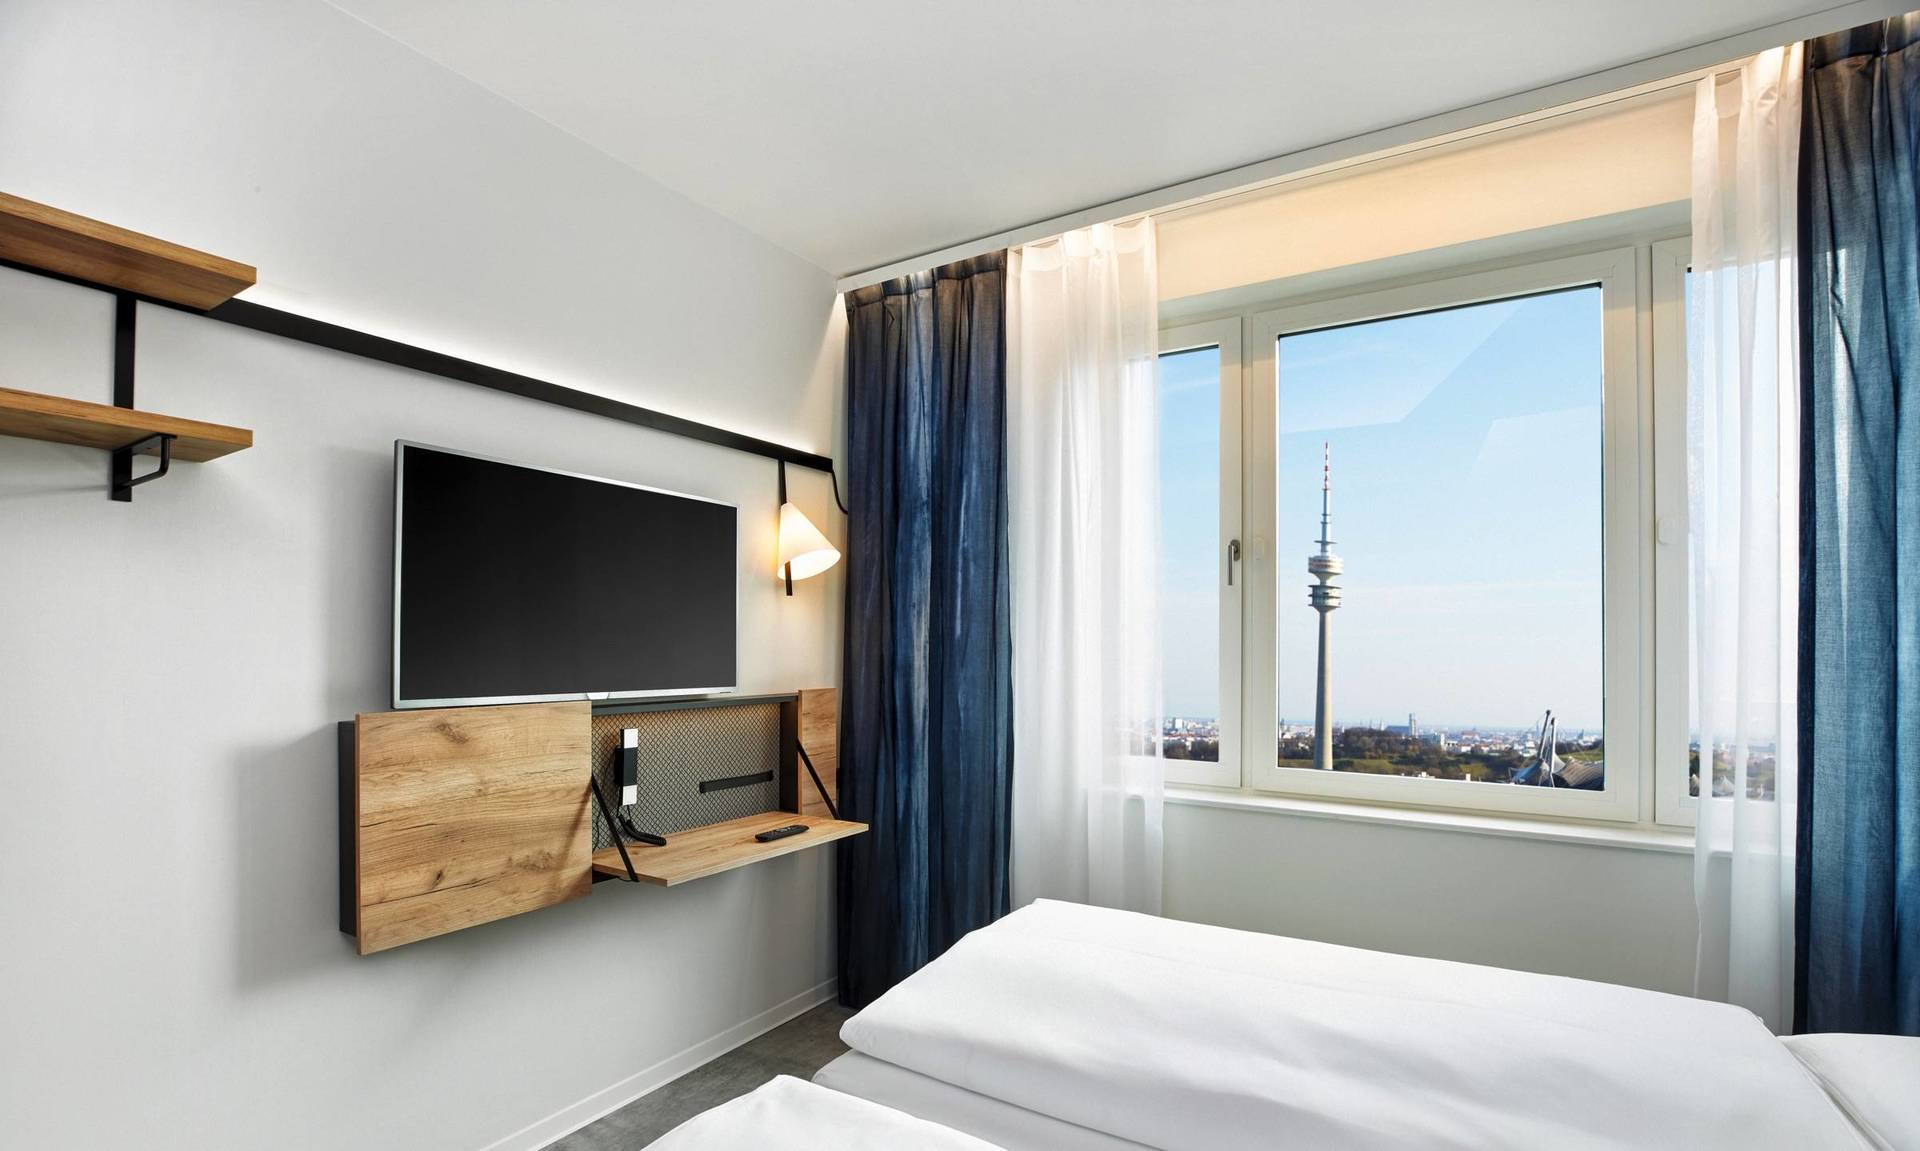 Hotelbeoordeling: H2 Hotel München Olympiapark